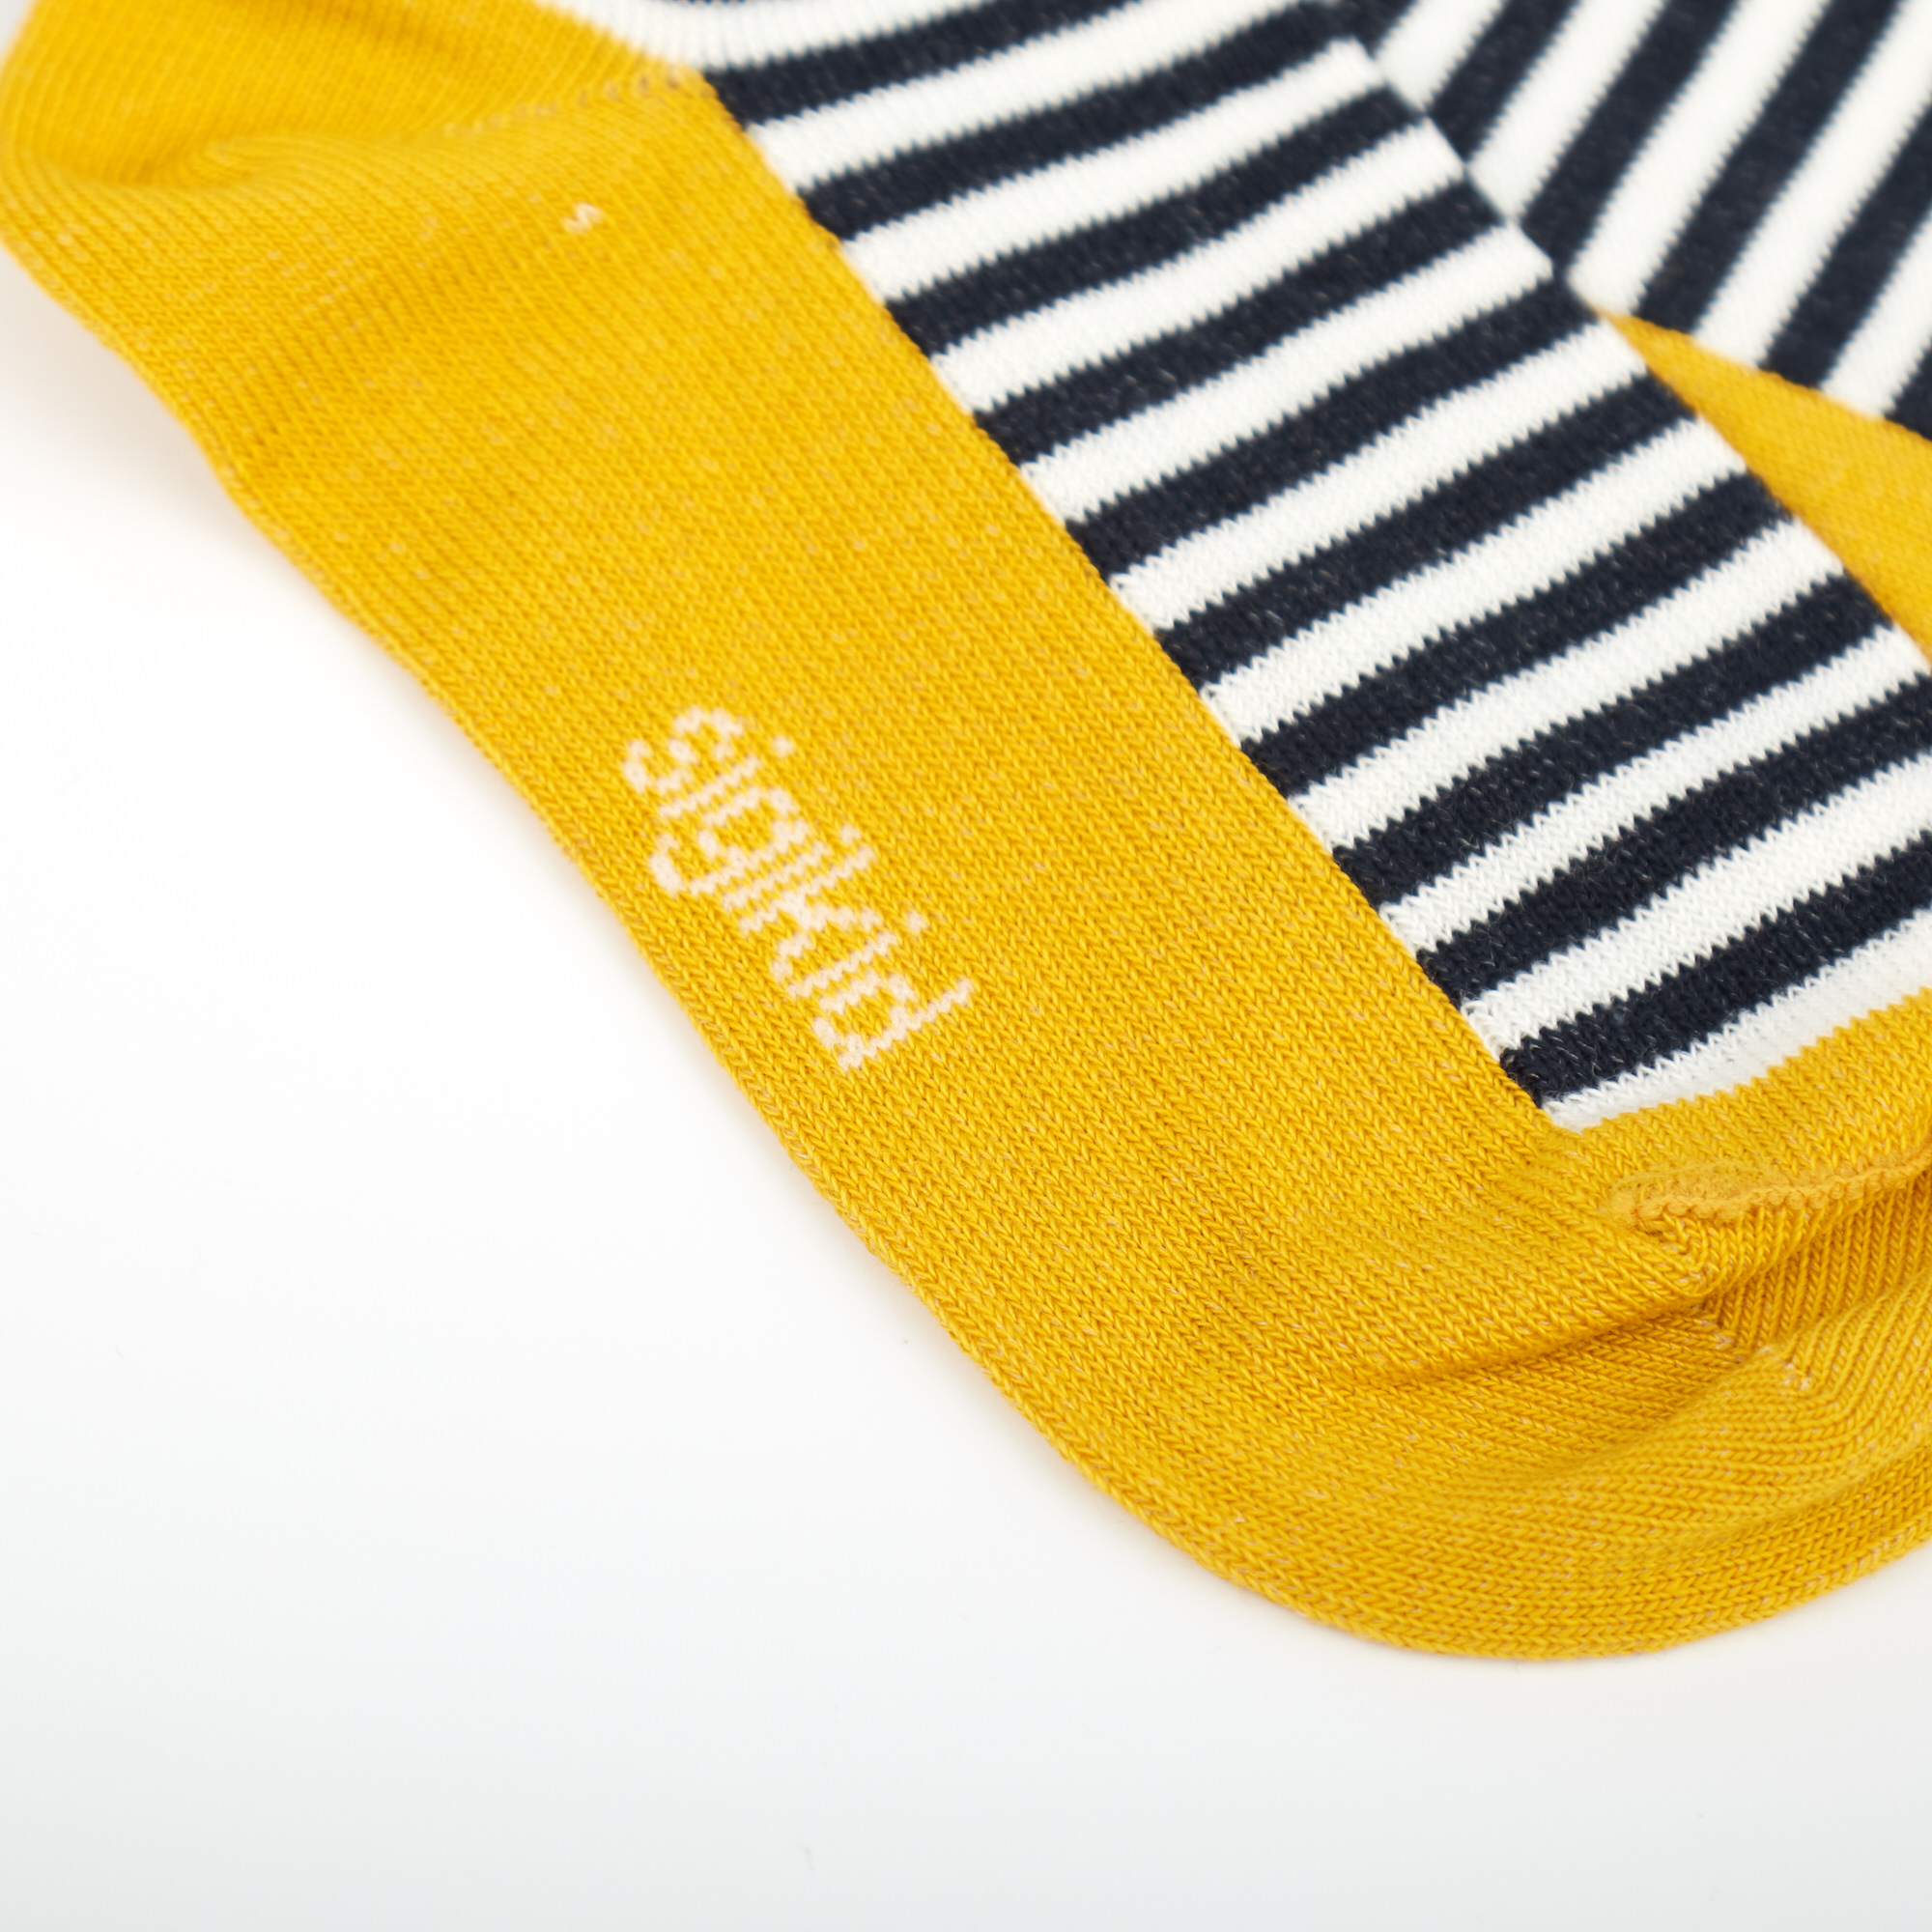 3 pair set baby socks striped, dots, flowers